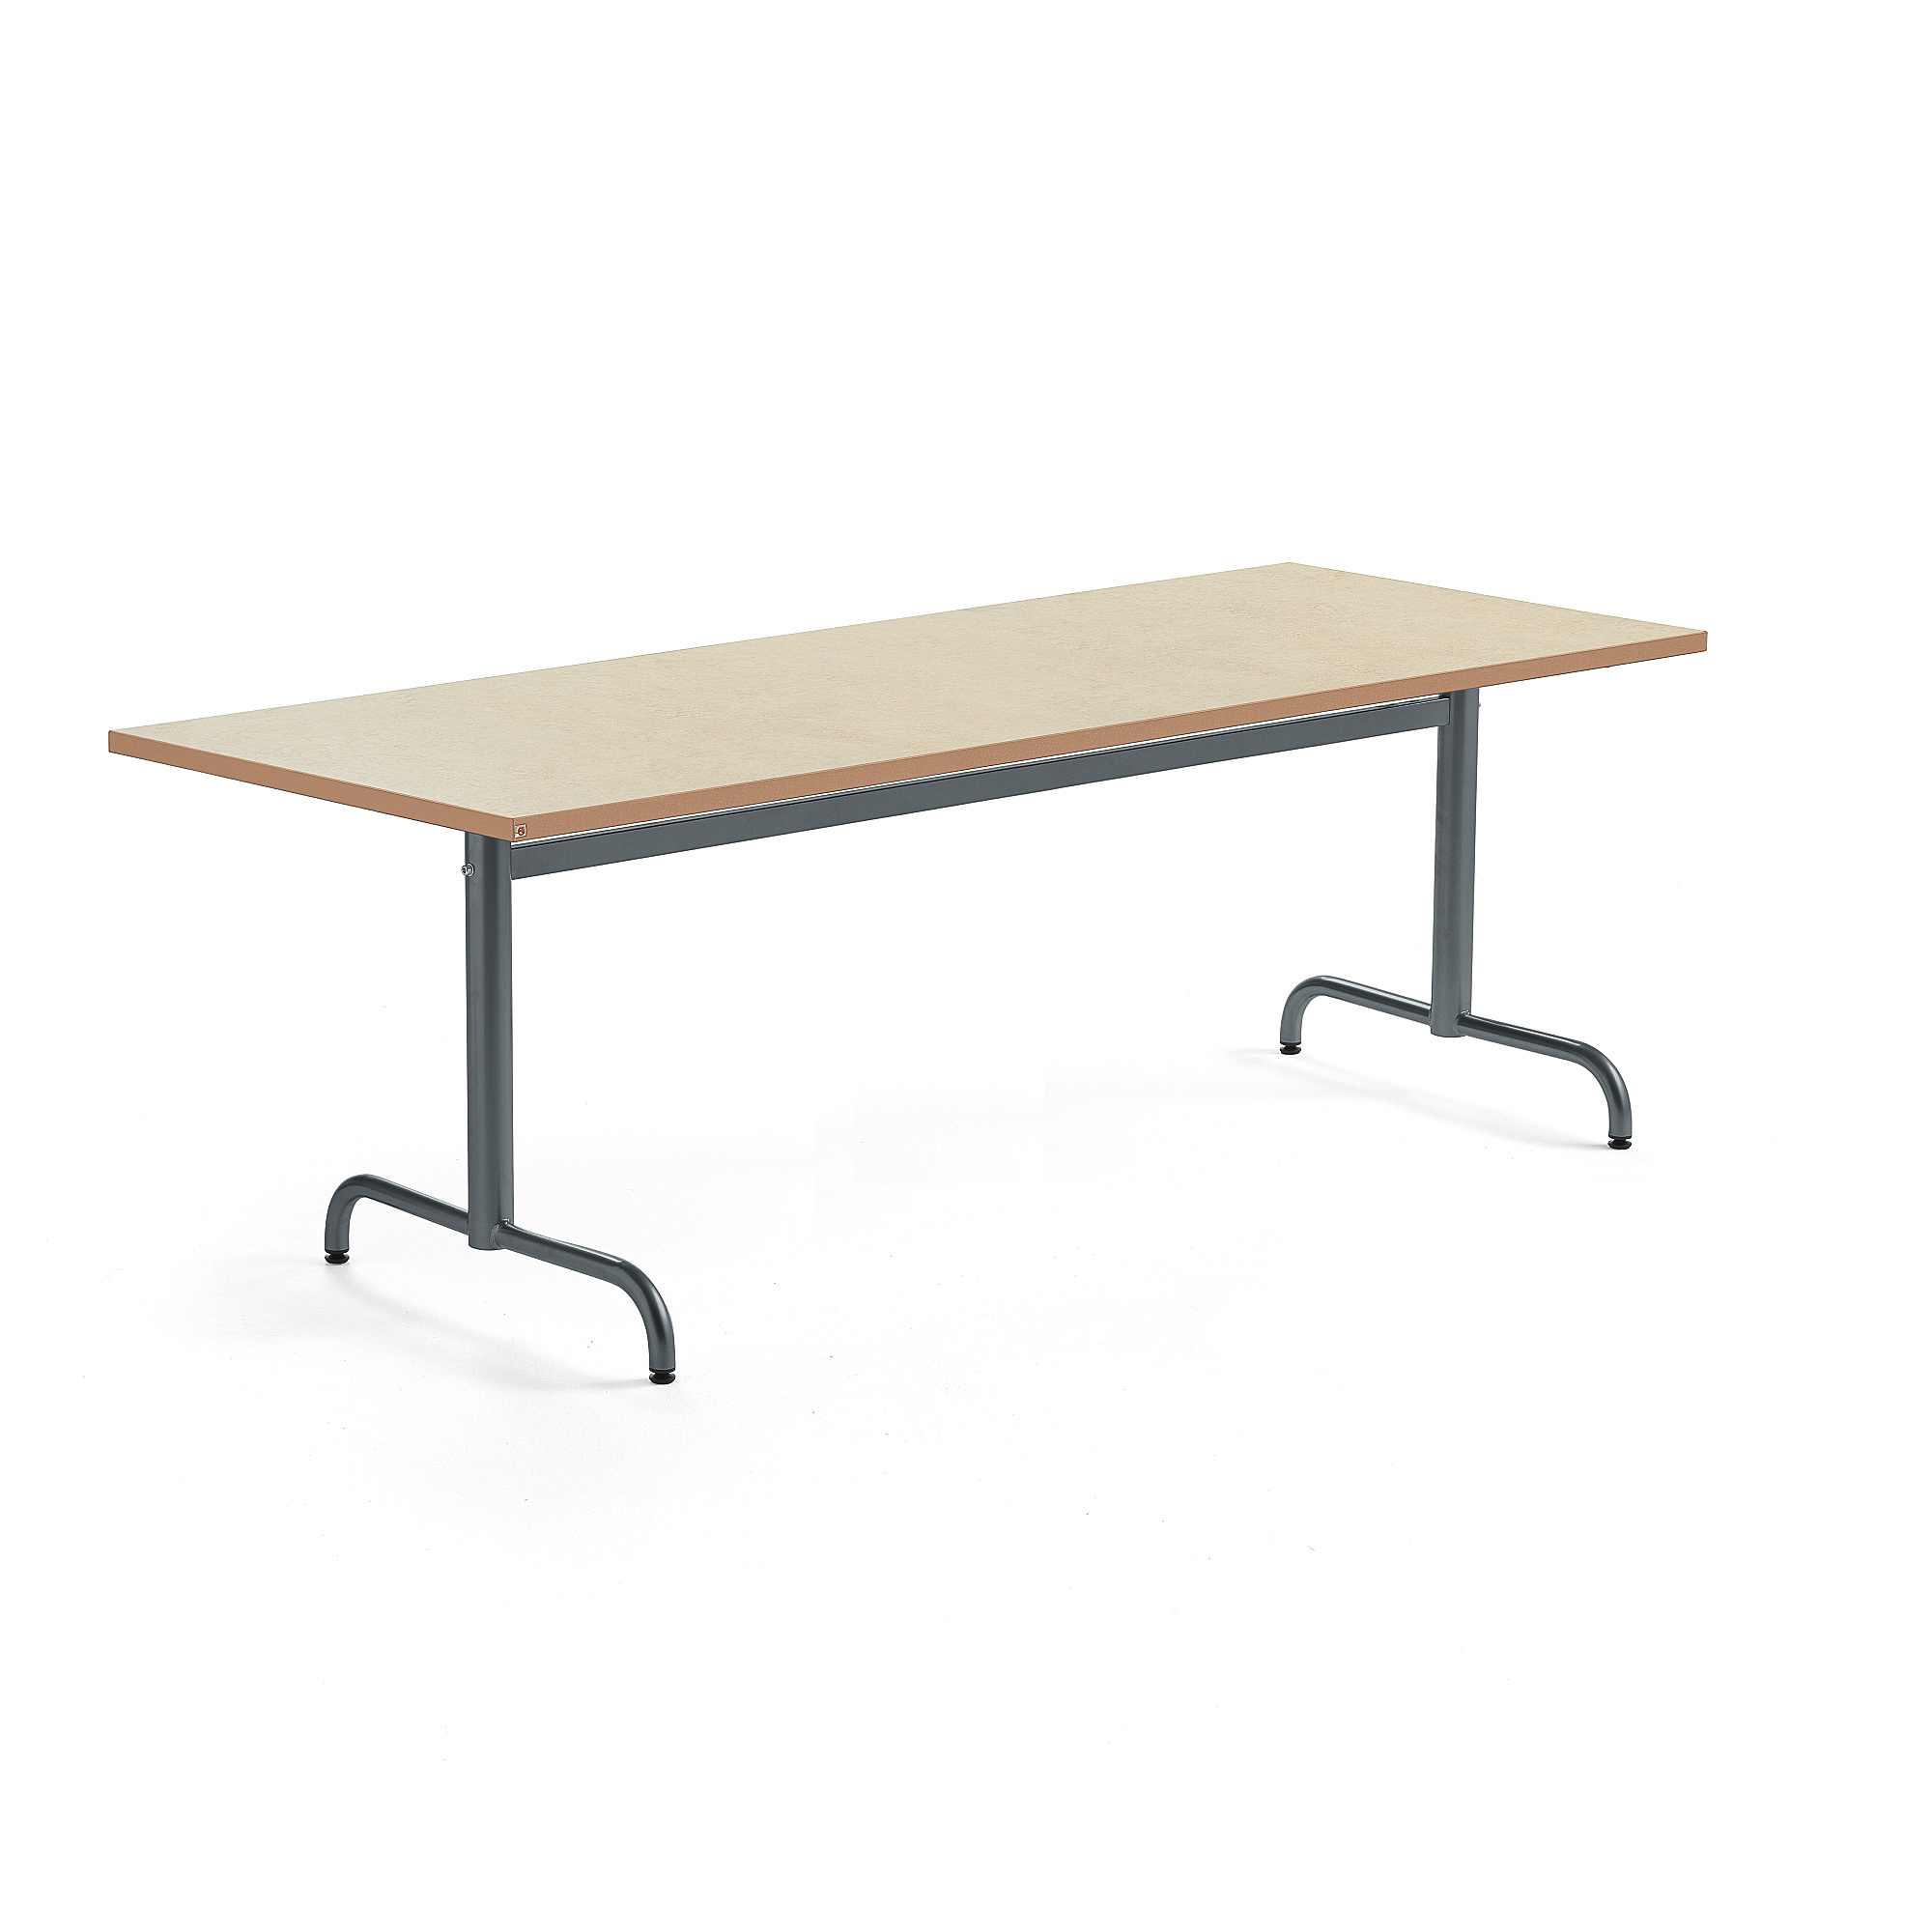 Stůl PLURAL, 1800x800x720 mm, linoleum, béžová, antracitově šedá